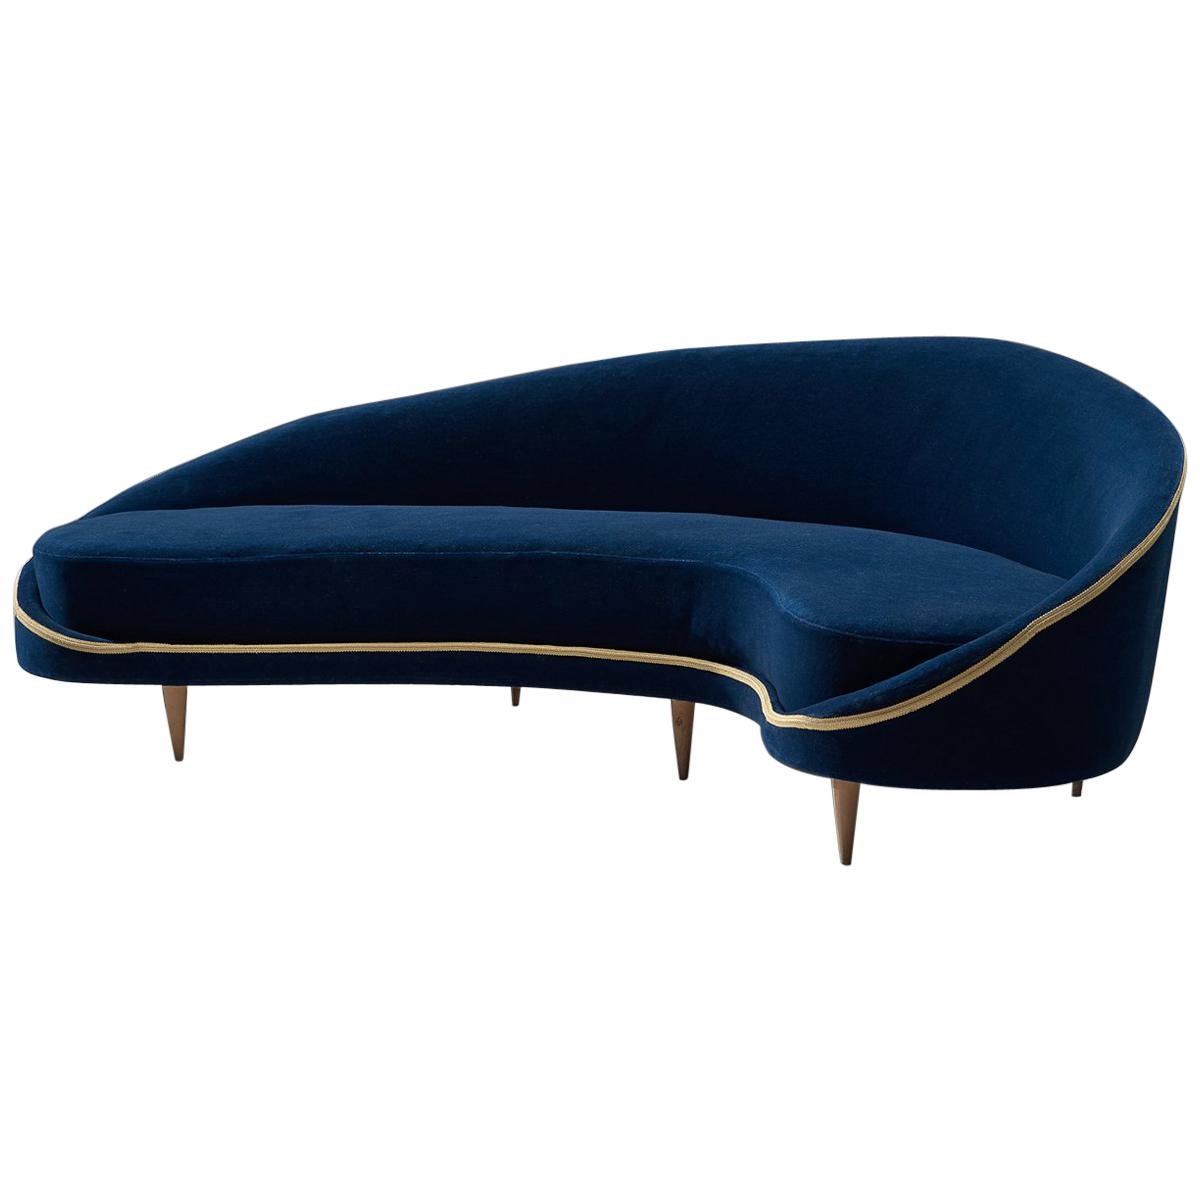 Frederico Munari Grand Curved Sofa in Blue Velvet